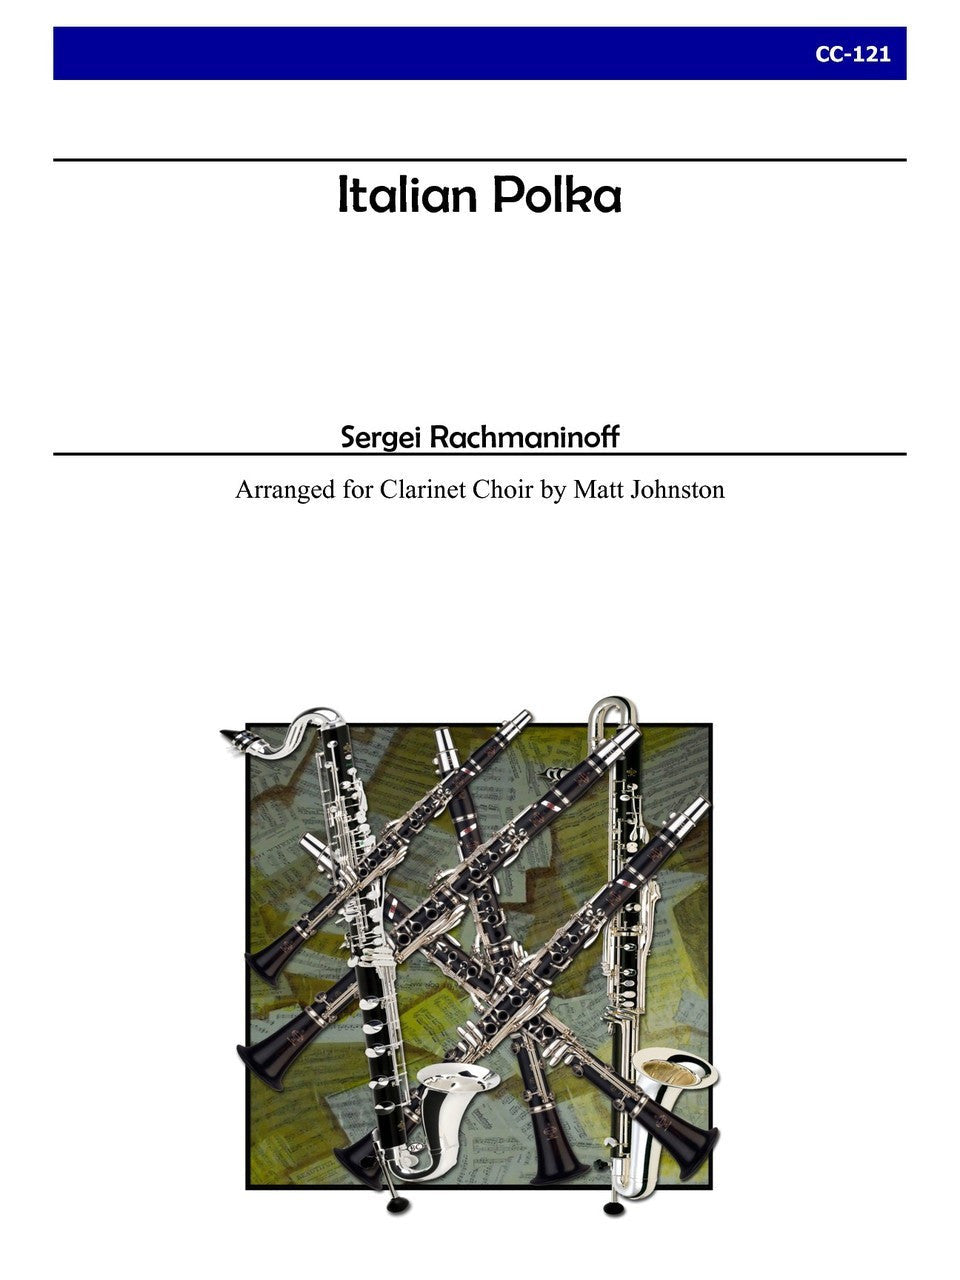 Rachmaninoff (arr. Matt Johnston) - Italian Polka for Clarinet Choir